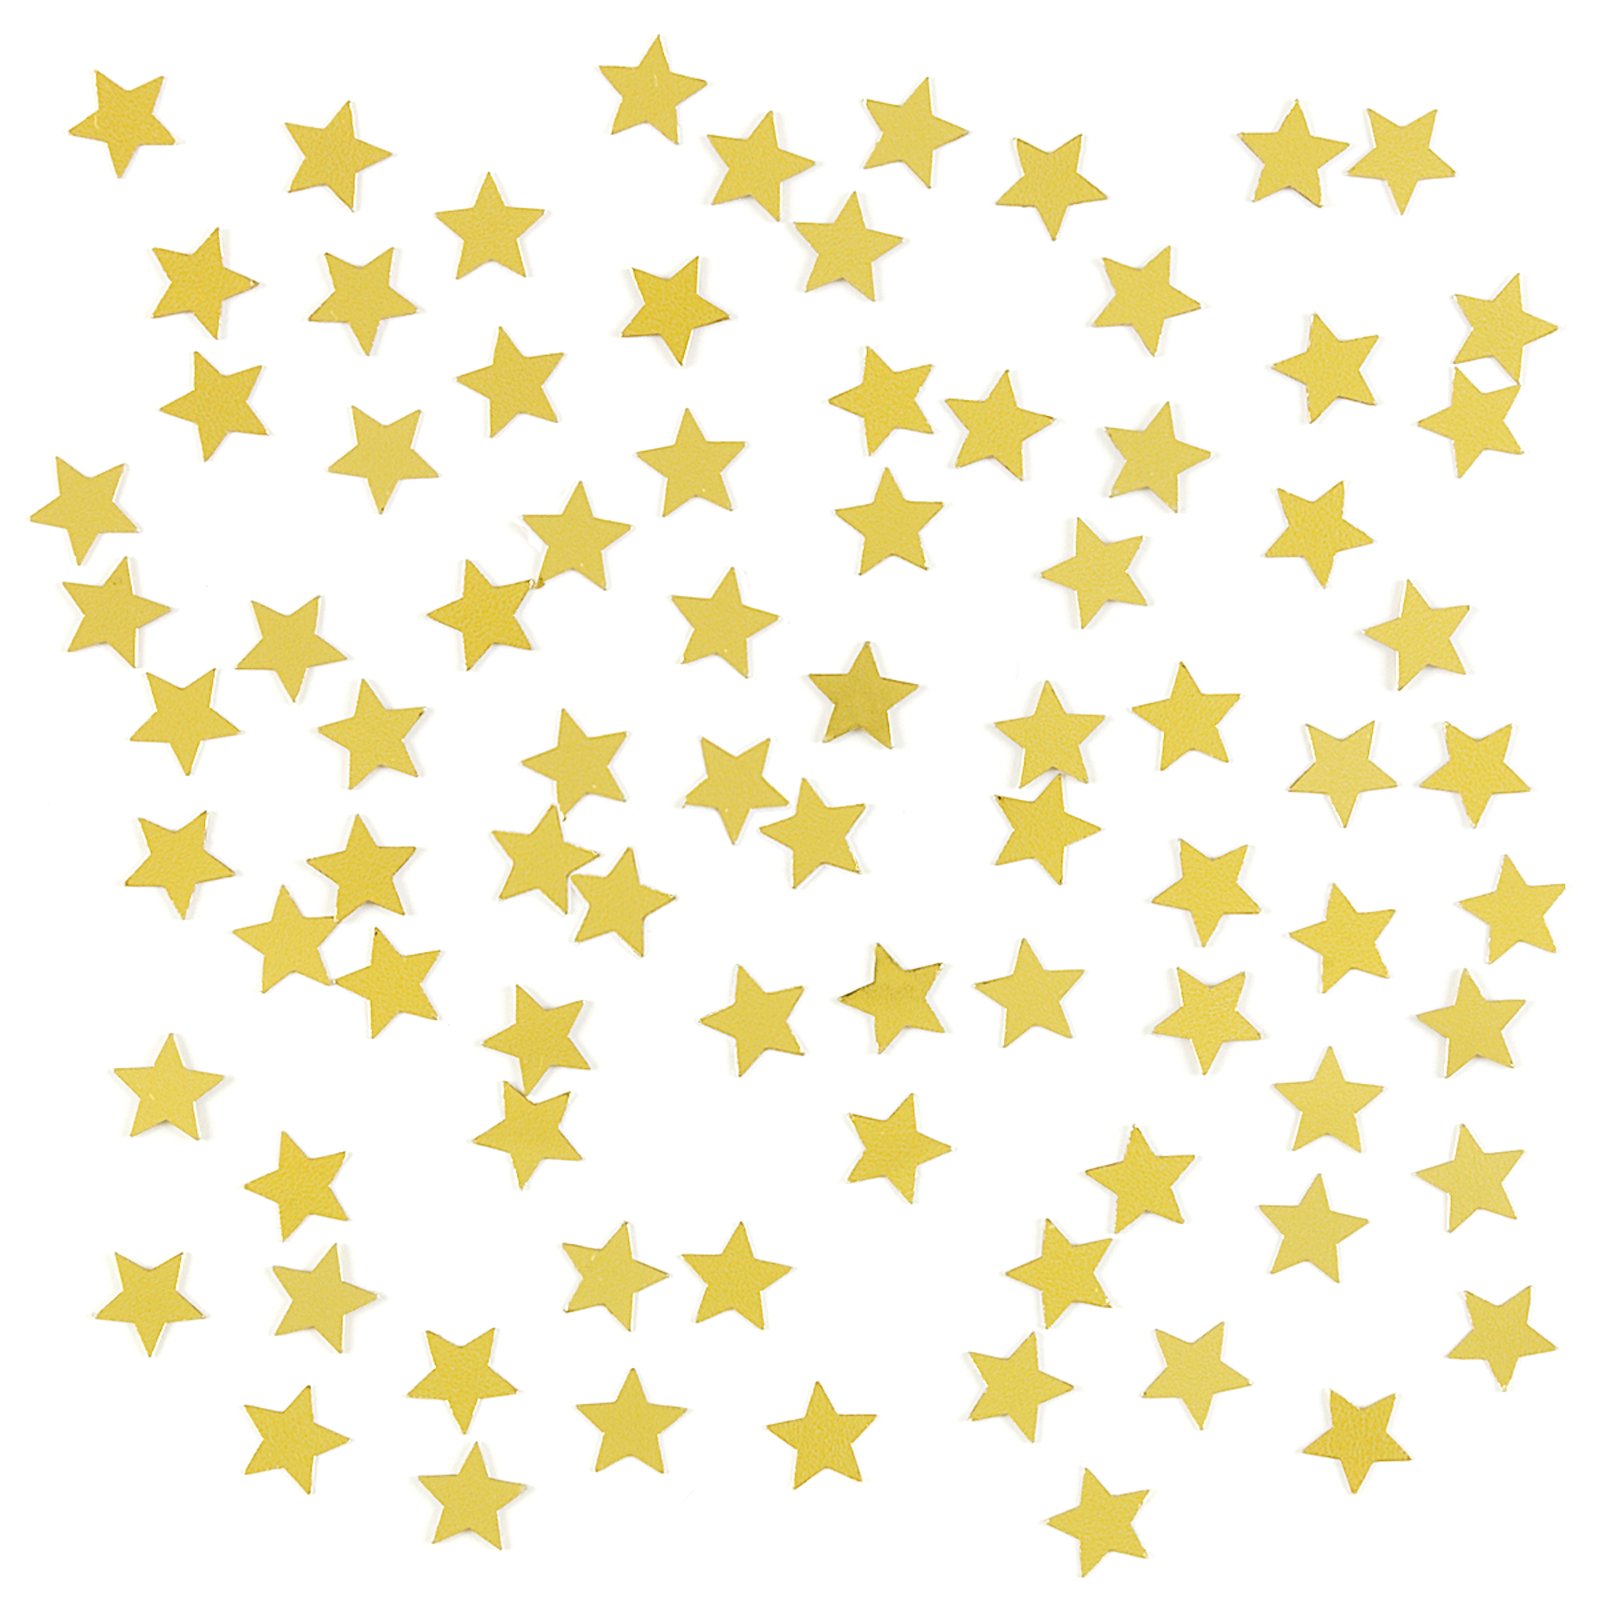 Gold star public domain stars gold curved star dividers stars clip clip art